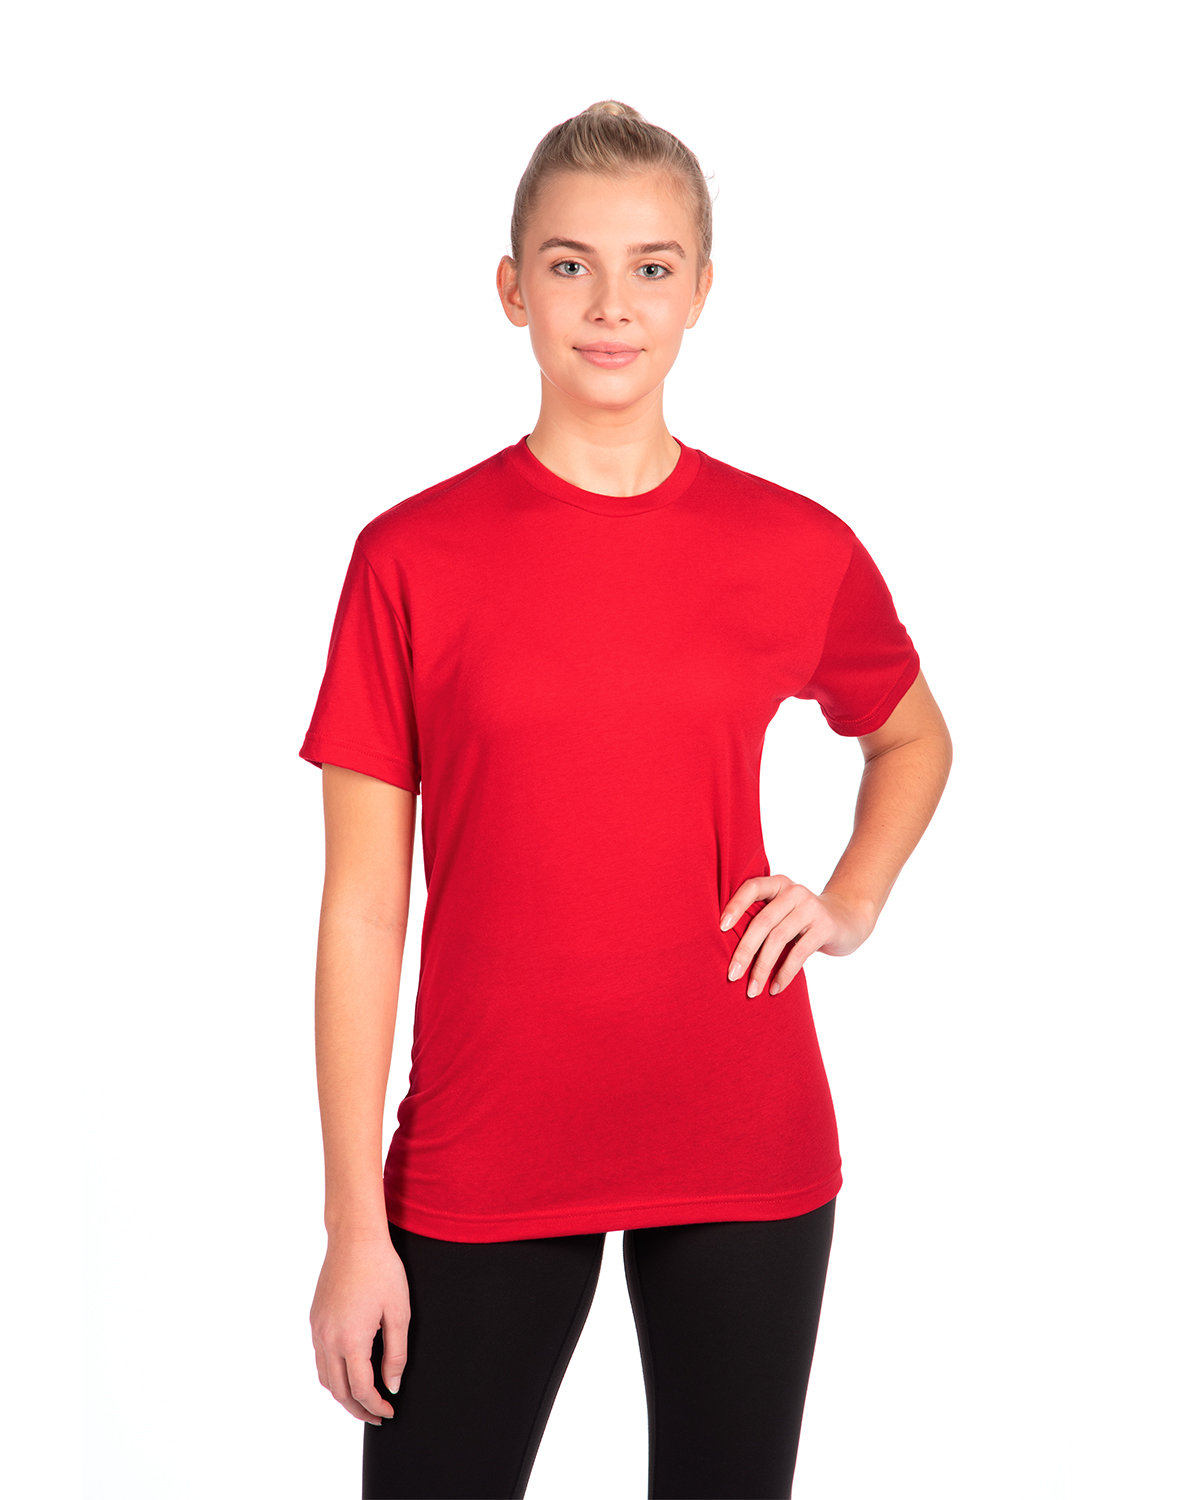 Next Level Apparel Unisex Triblend T-Shirt red 